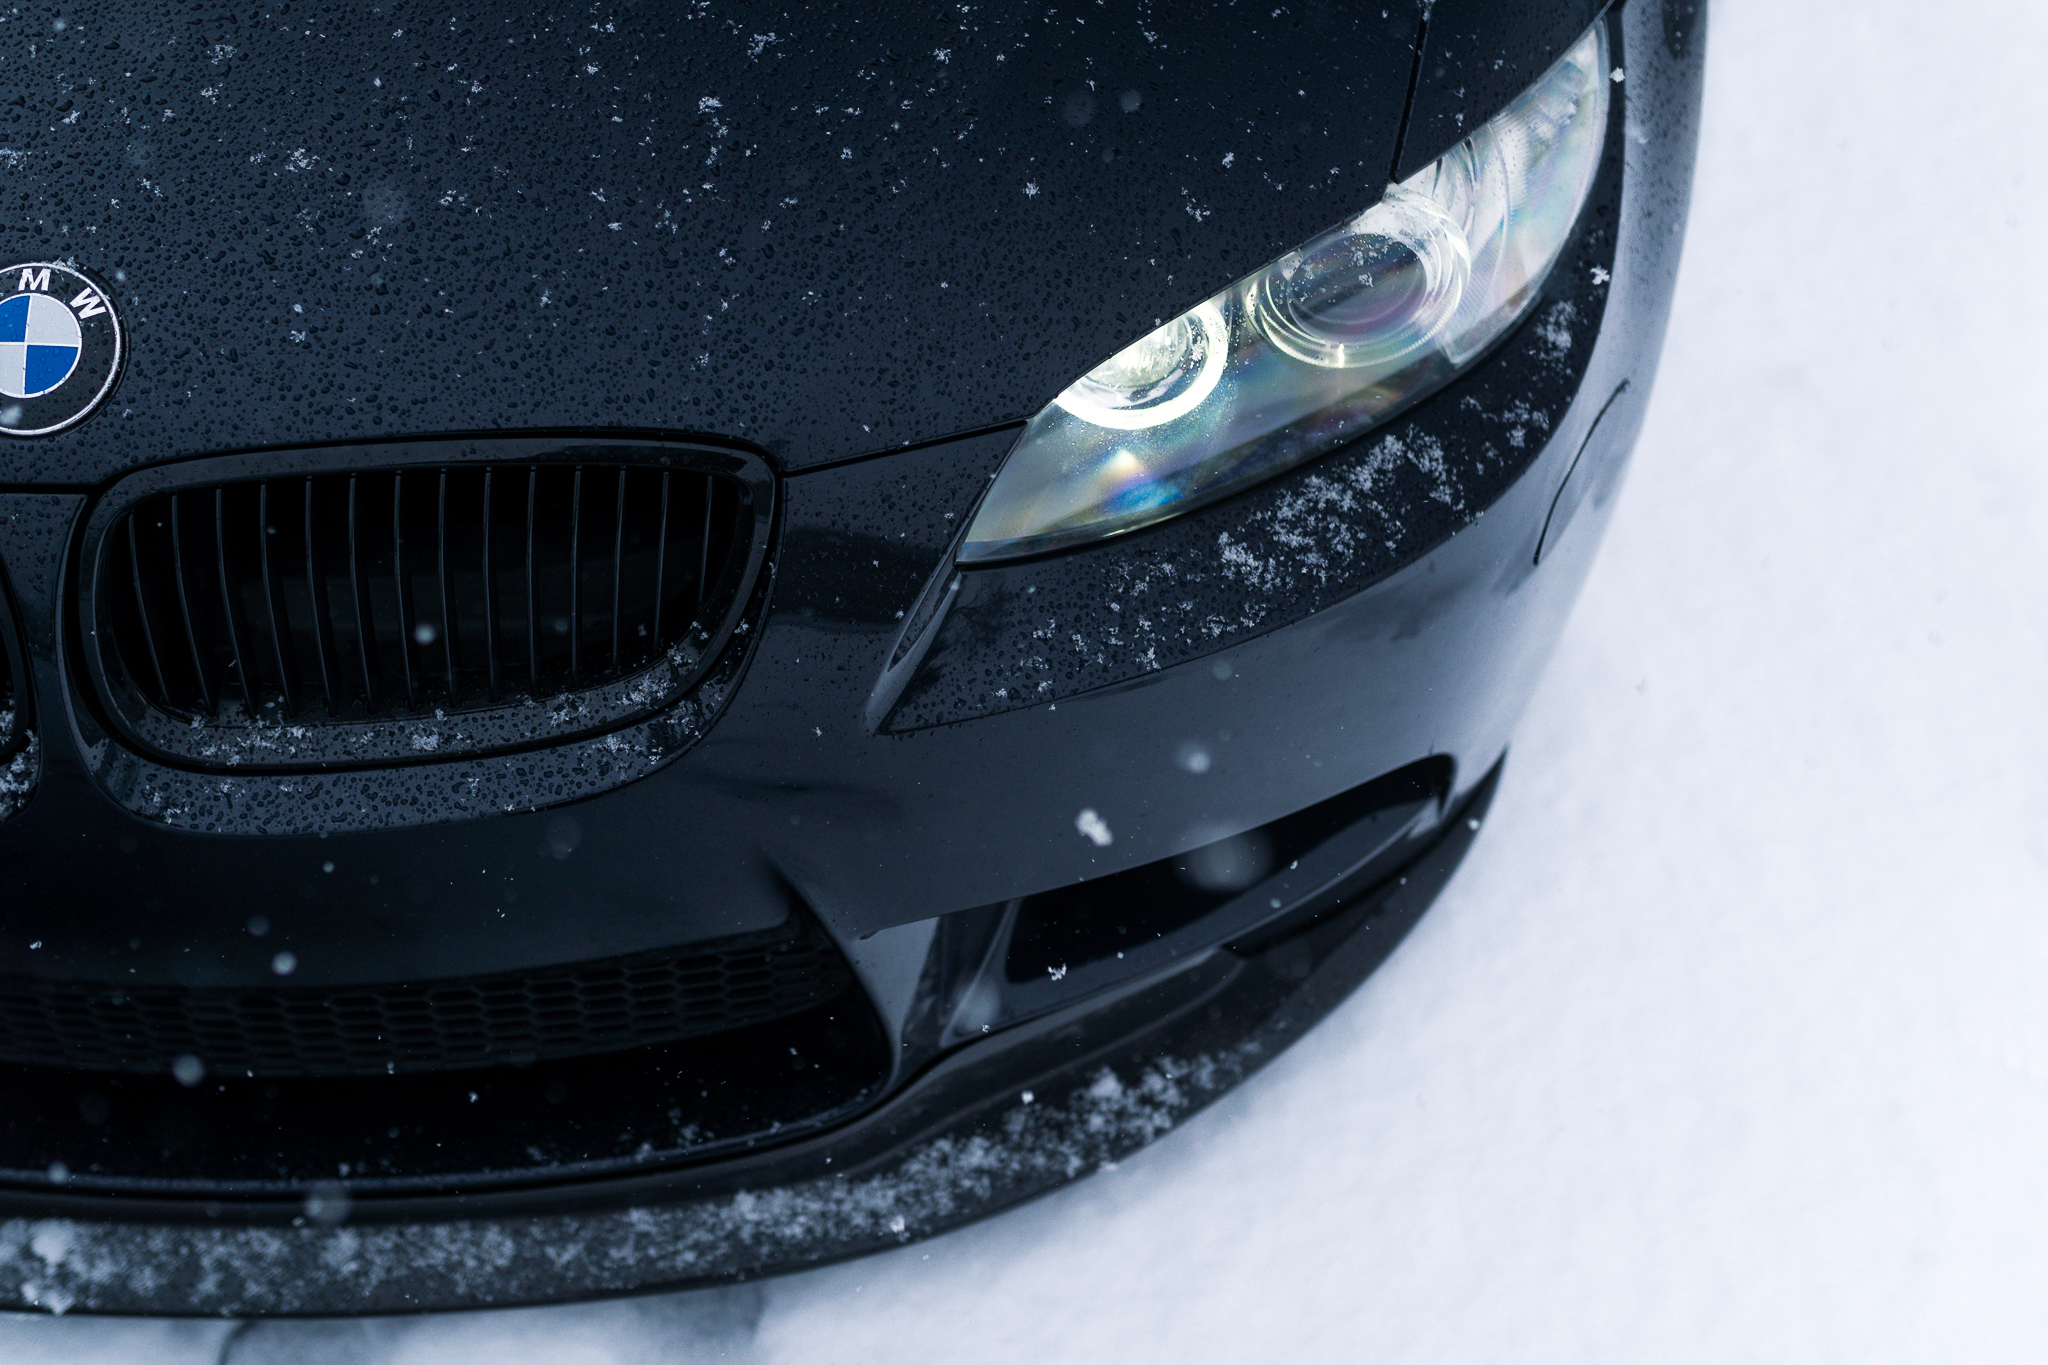 General 2048x1365 car BMW snow headlights